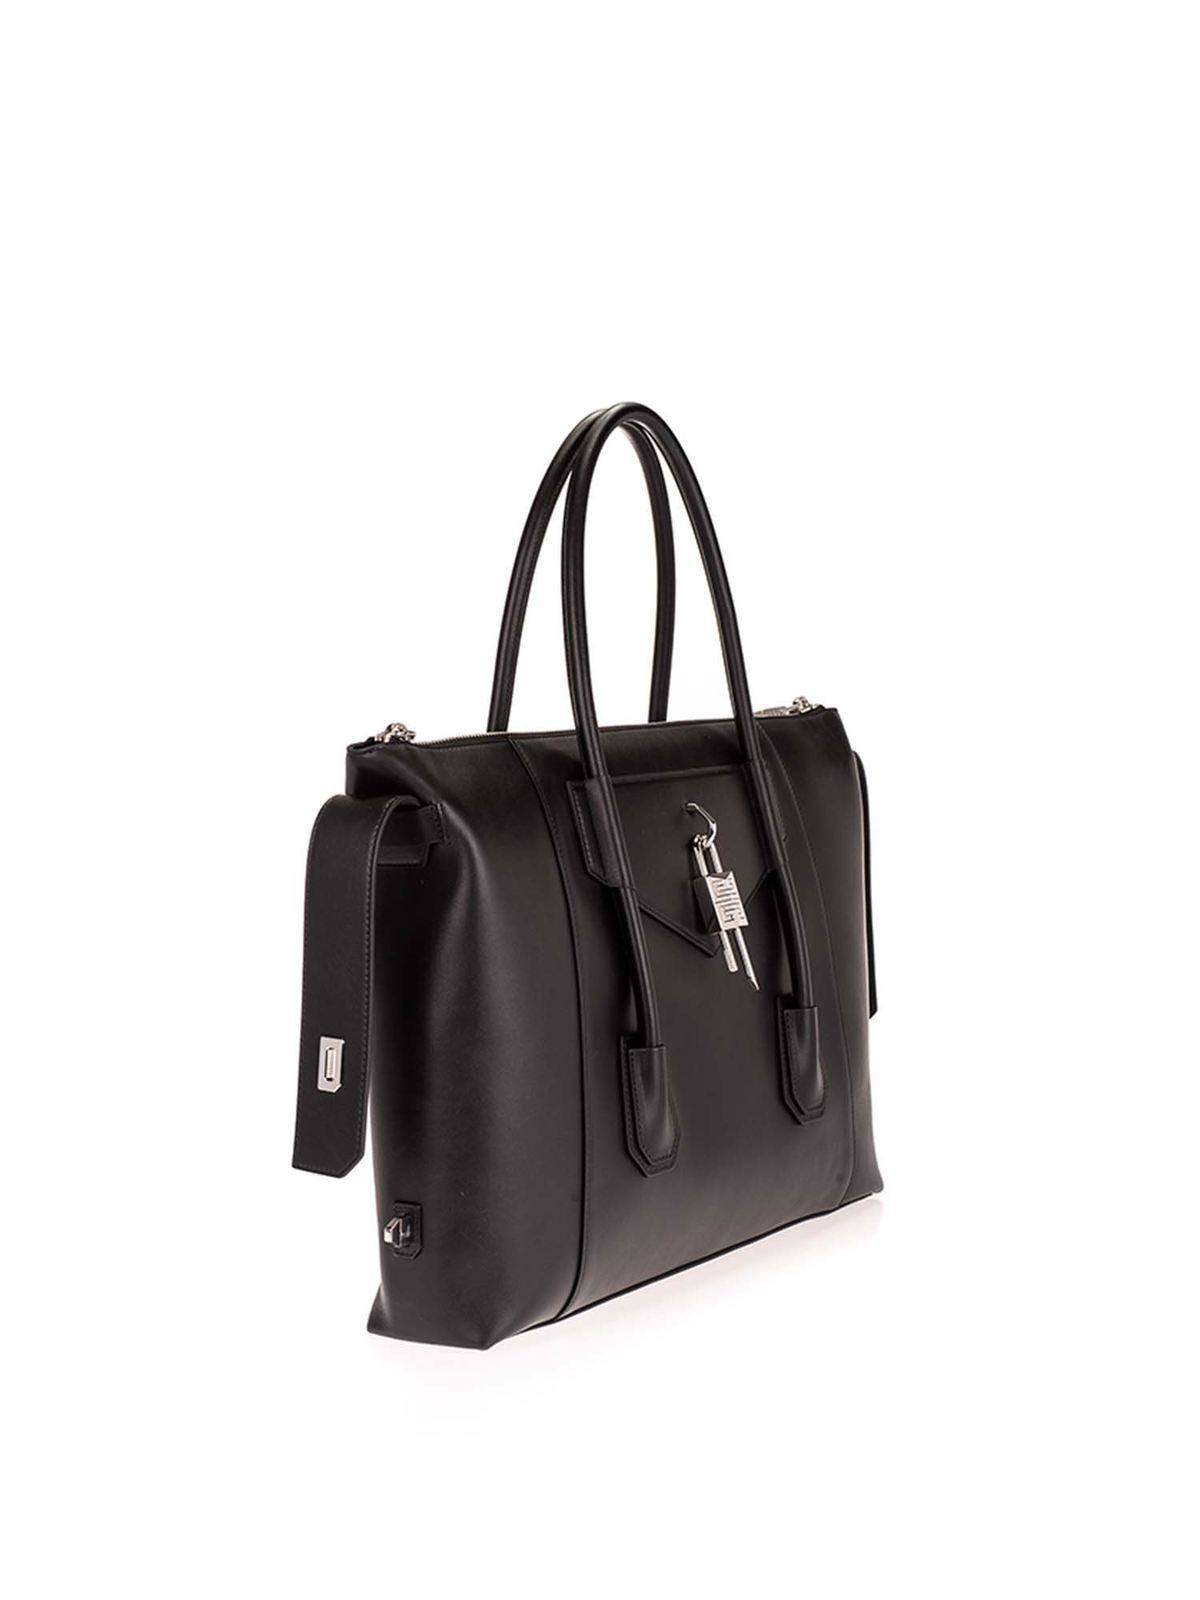 Givenchy Medium Antigona Soft Lock Bag in Calfskin